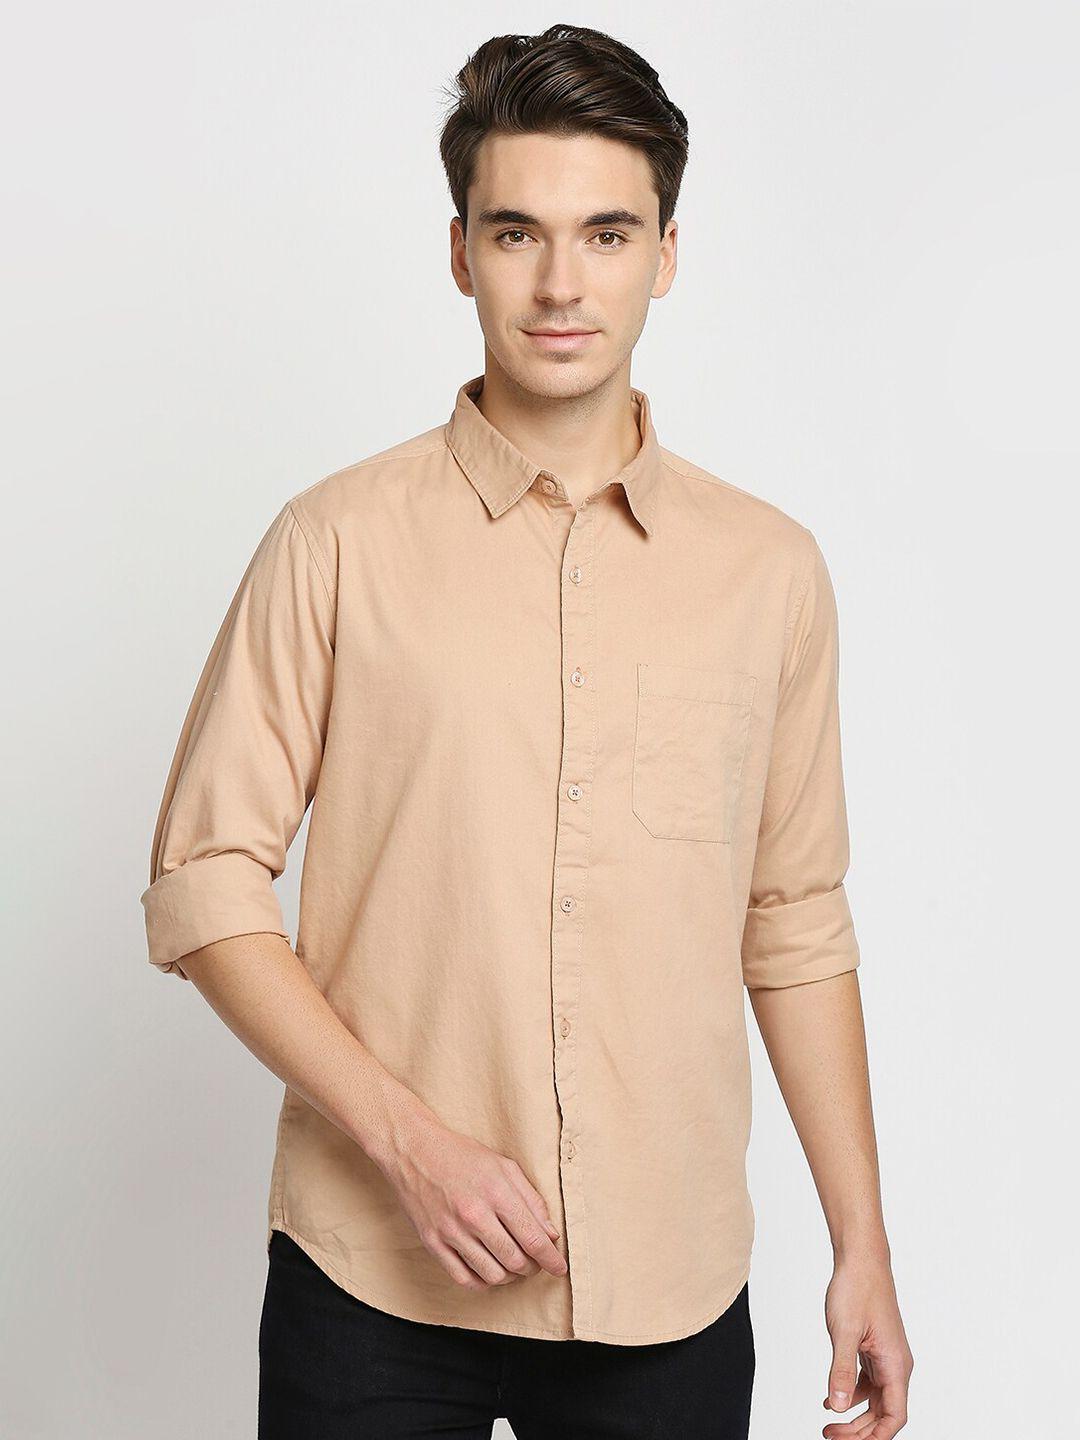 valen-club-men-beige-solid-pure-cotton-slim-fit-casual-shirt